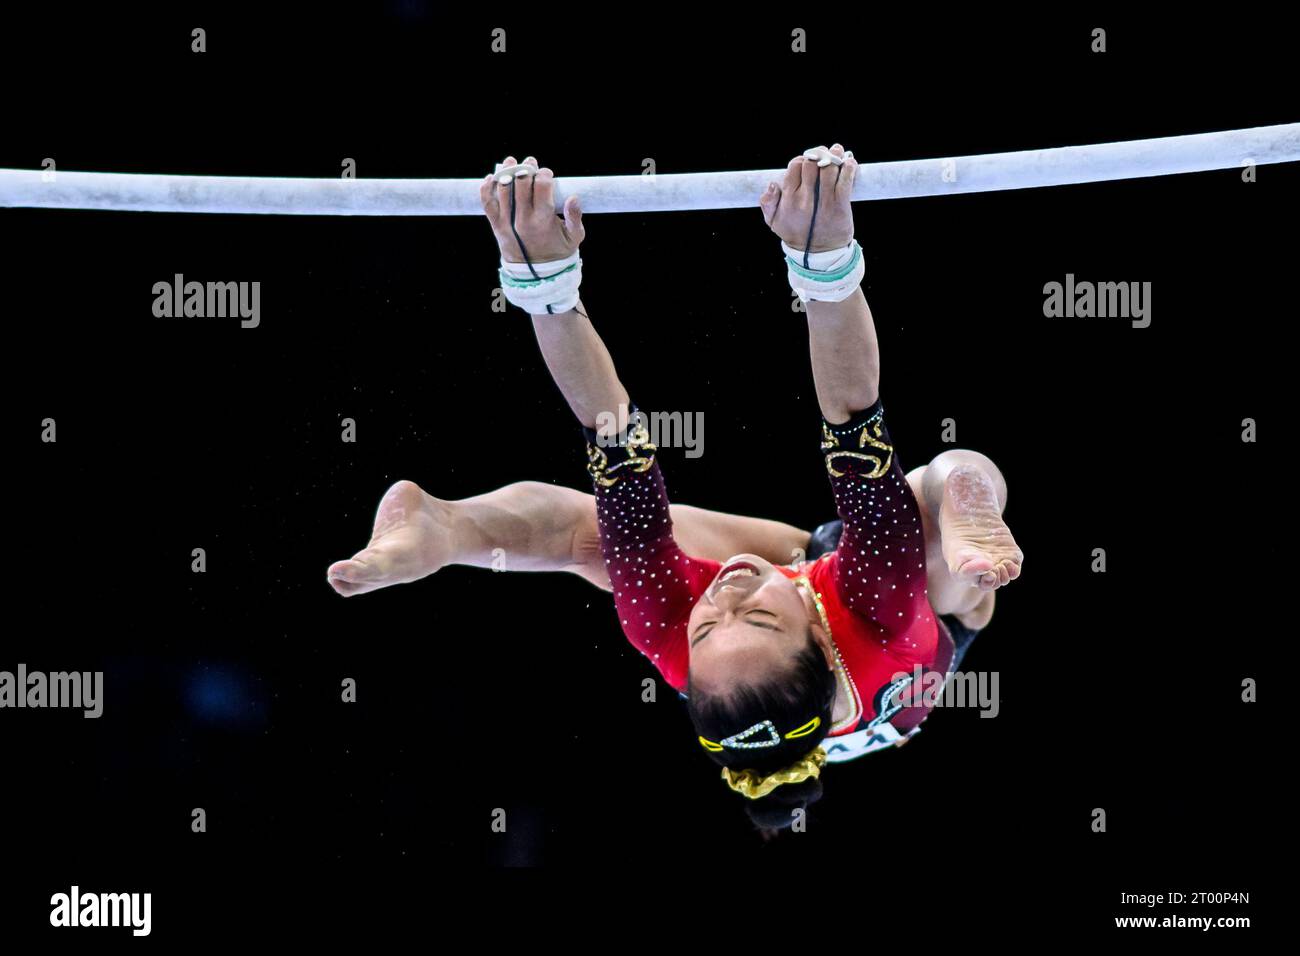 Simone Biles leads US women's team to gymnastics world championship title, Athletics News